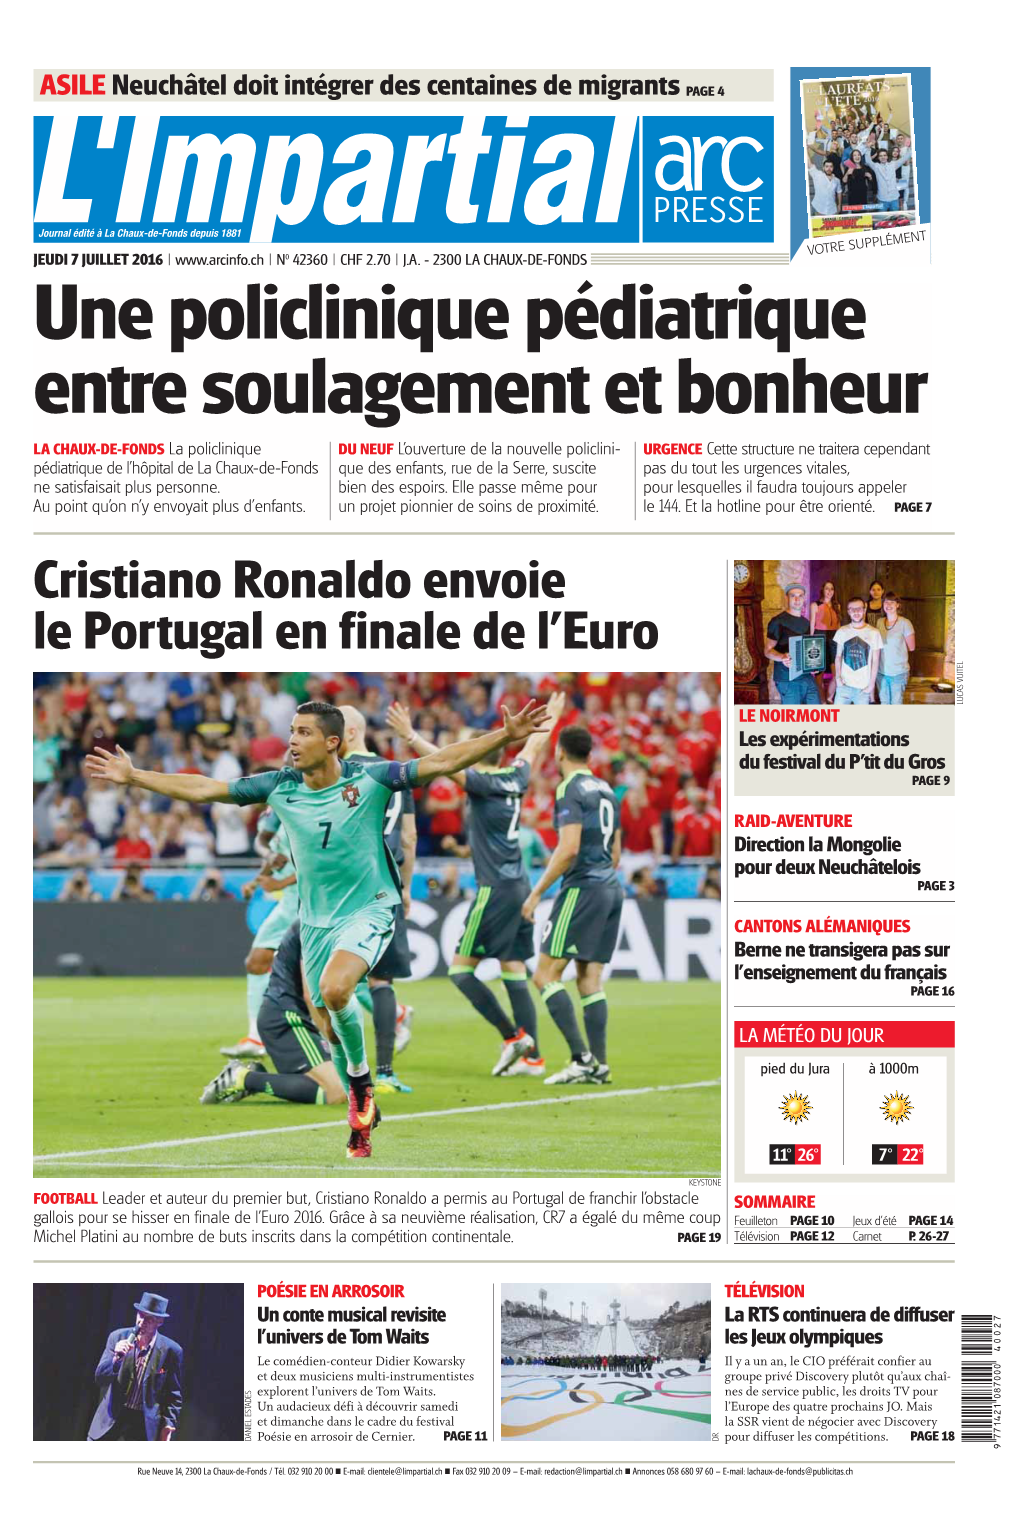 Cristiano Ronaldo Envoie Le Portugal En Finale De L'euro